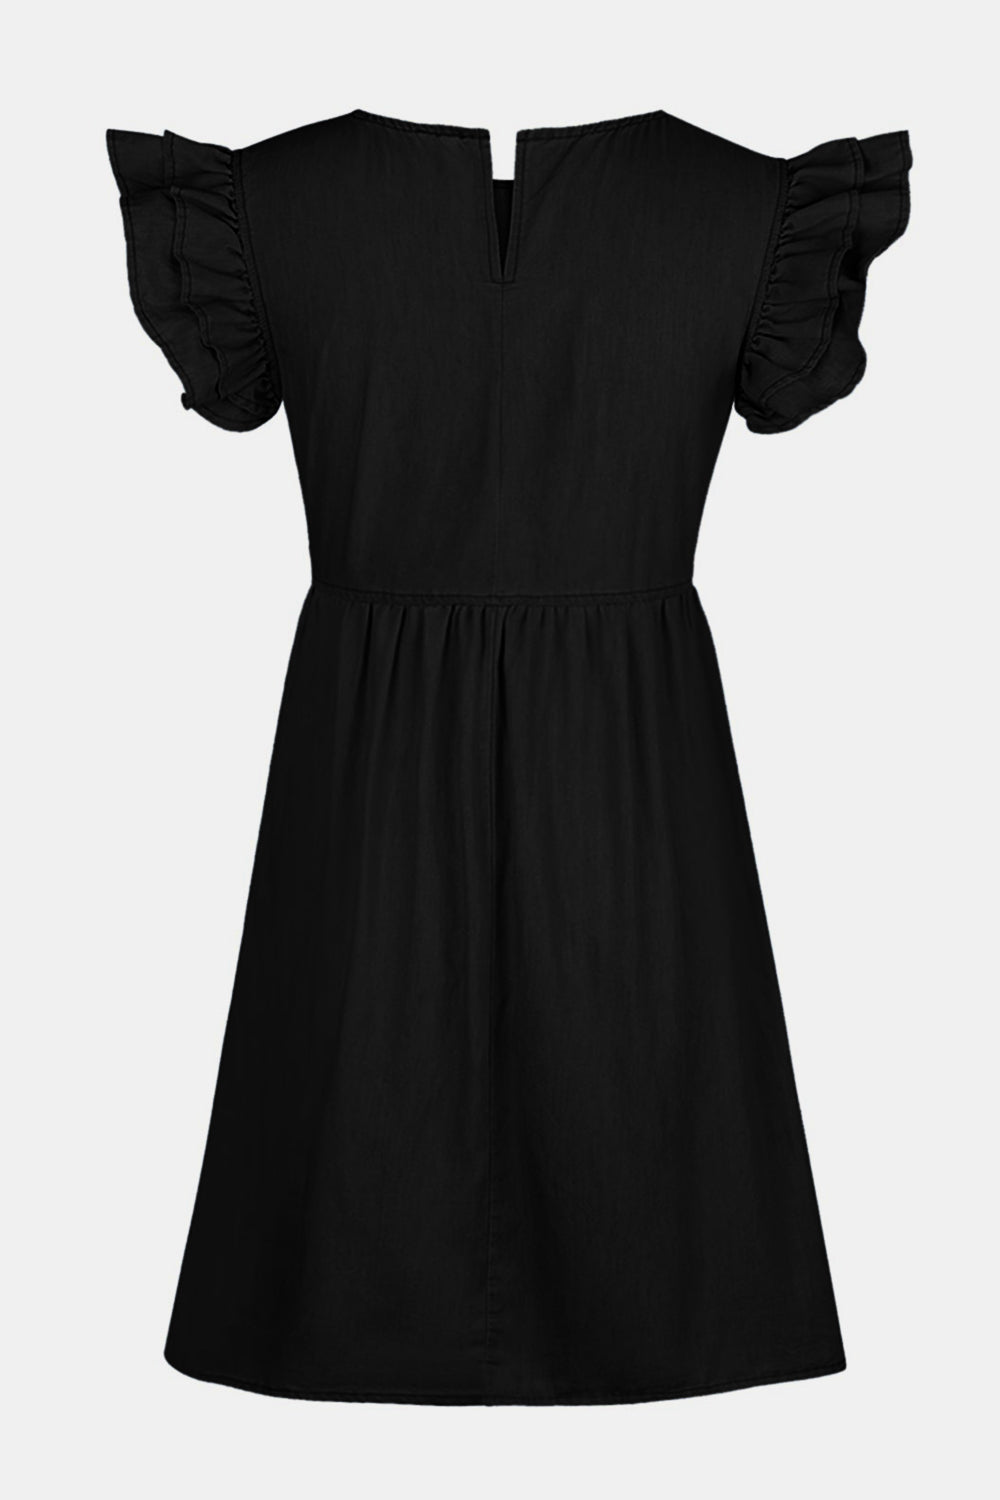 TEEK - Ruffled Round Neck Cap Sleeve Denim Dress DRESS TEEK Trend Black S 